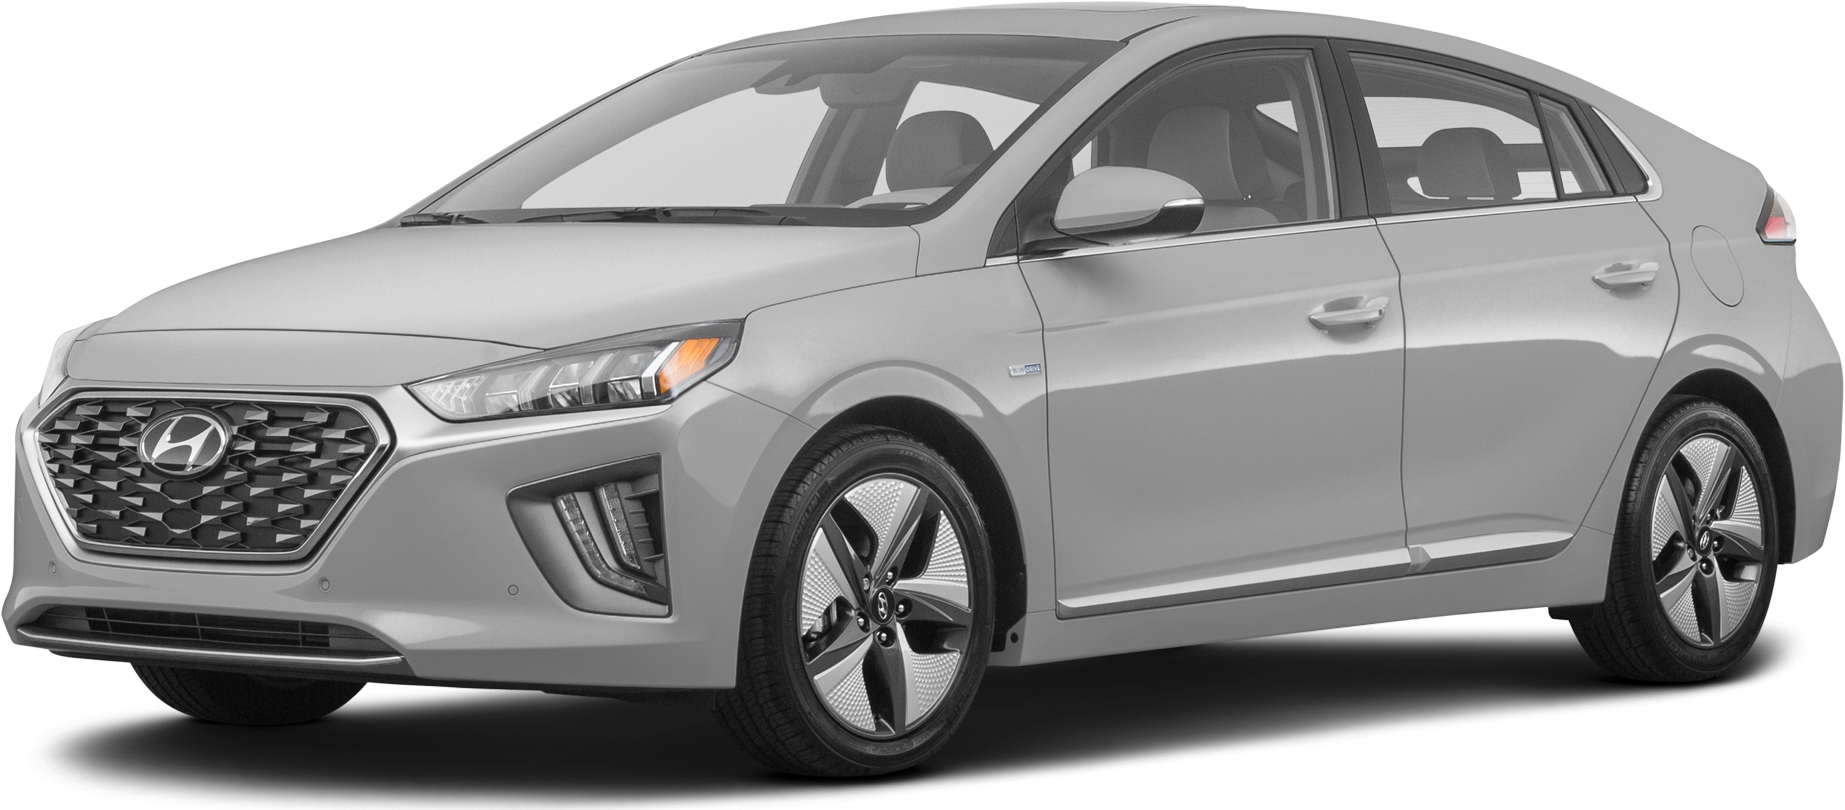 2021 Hyundai Ioniq Hybrid Price, Value, Ratings & Reviews